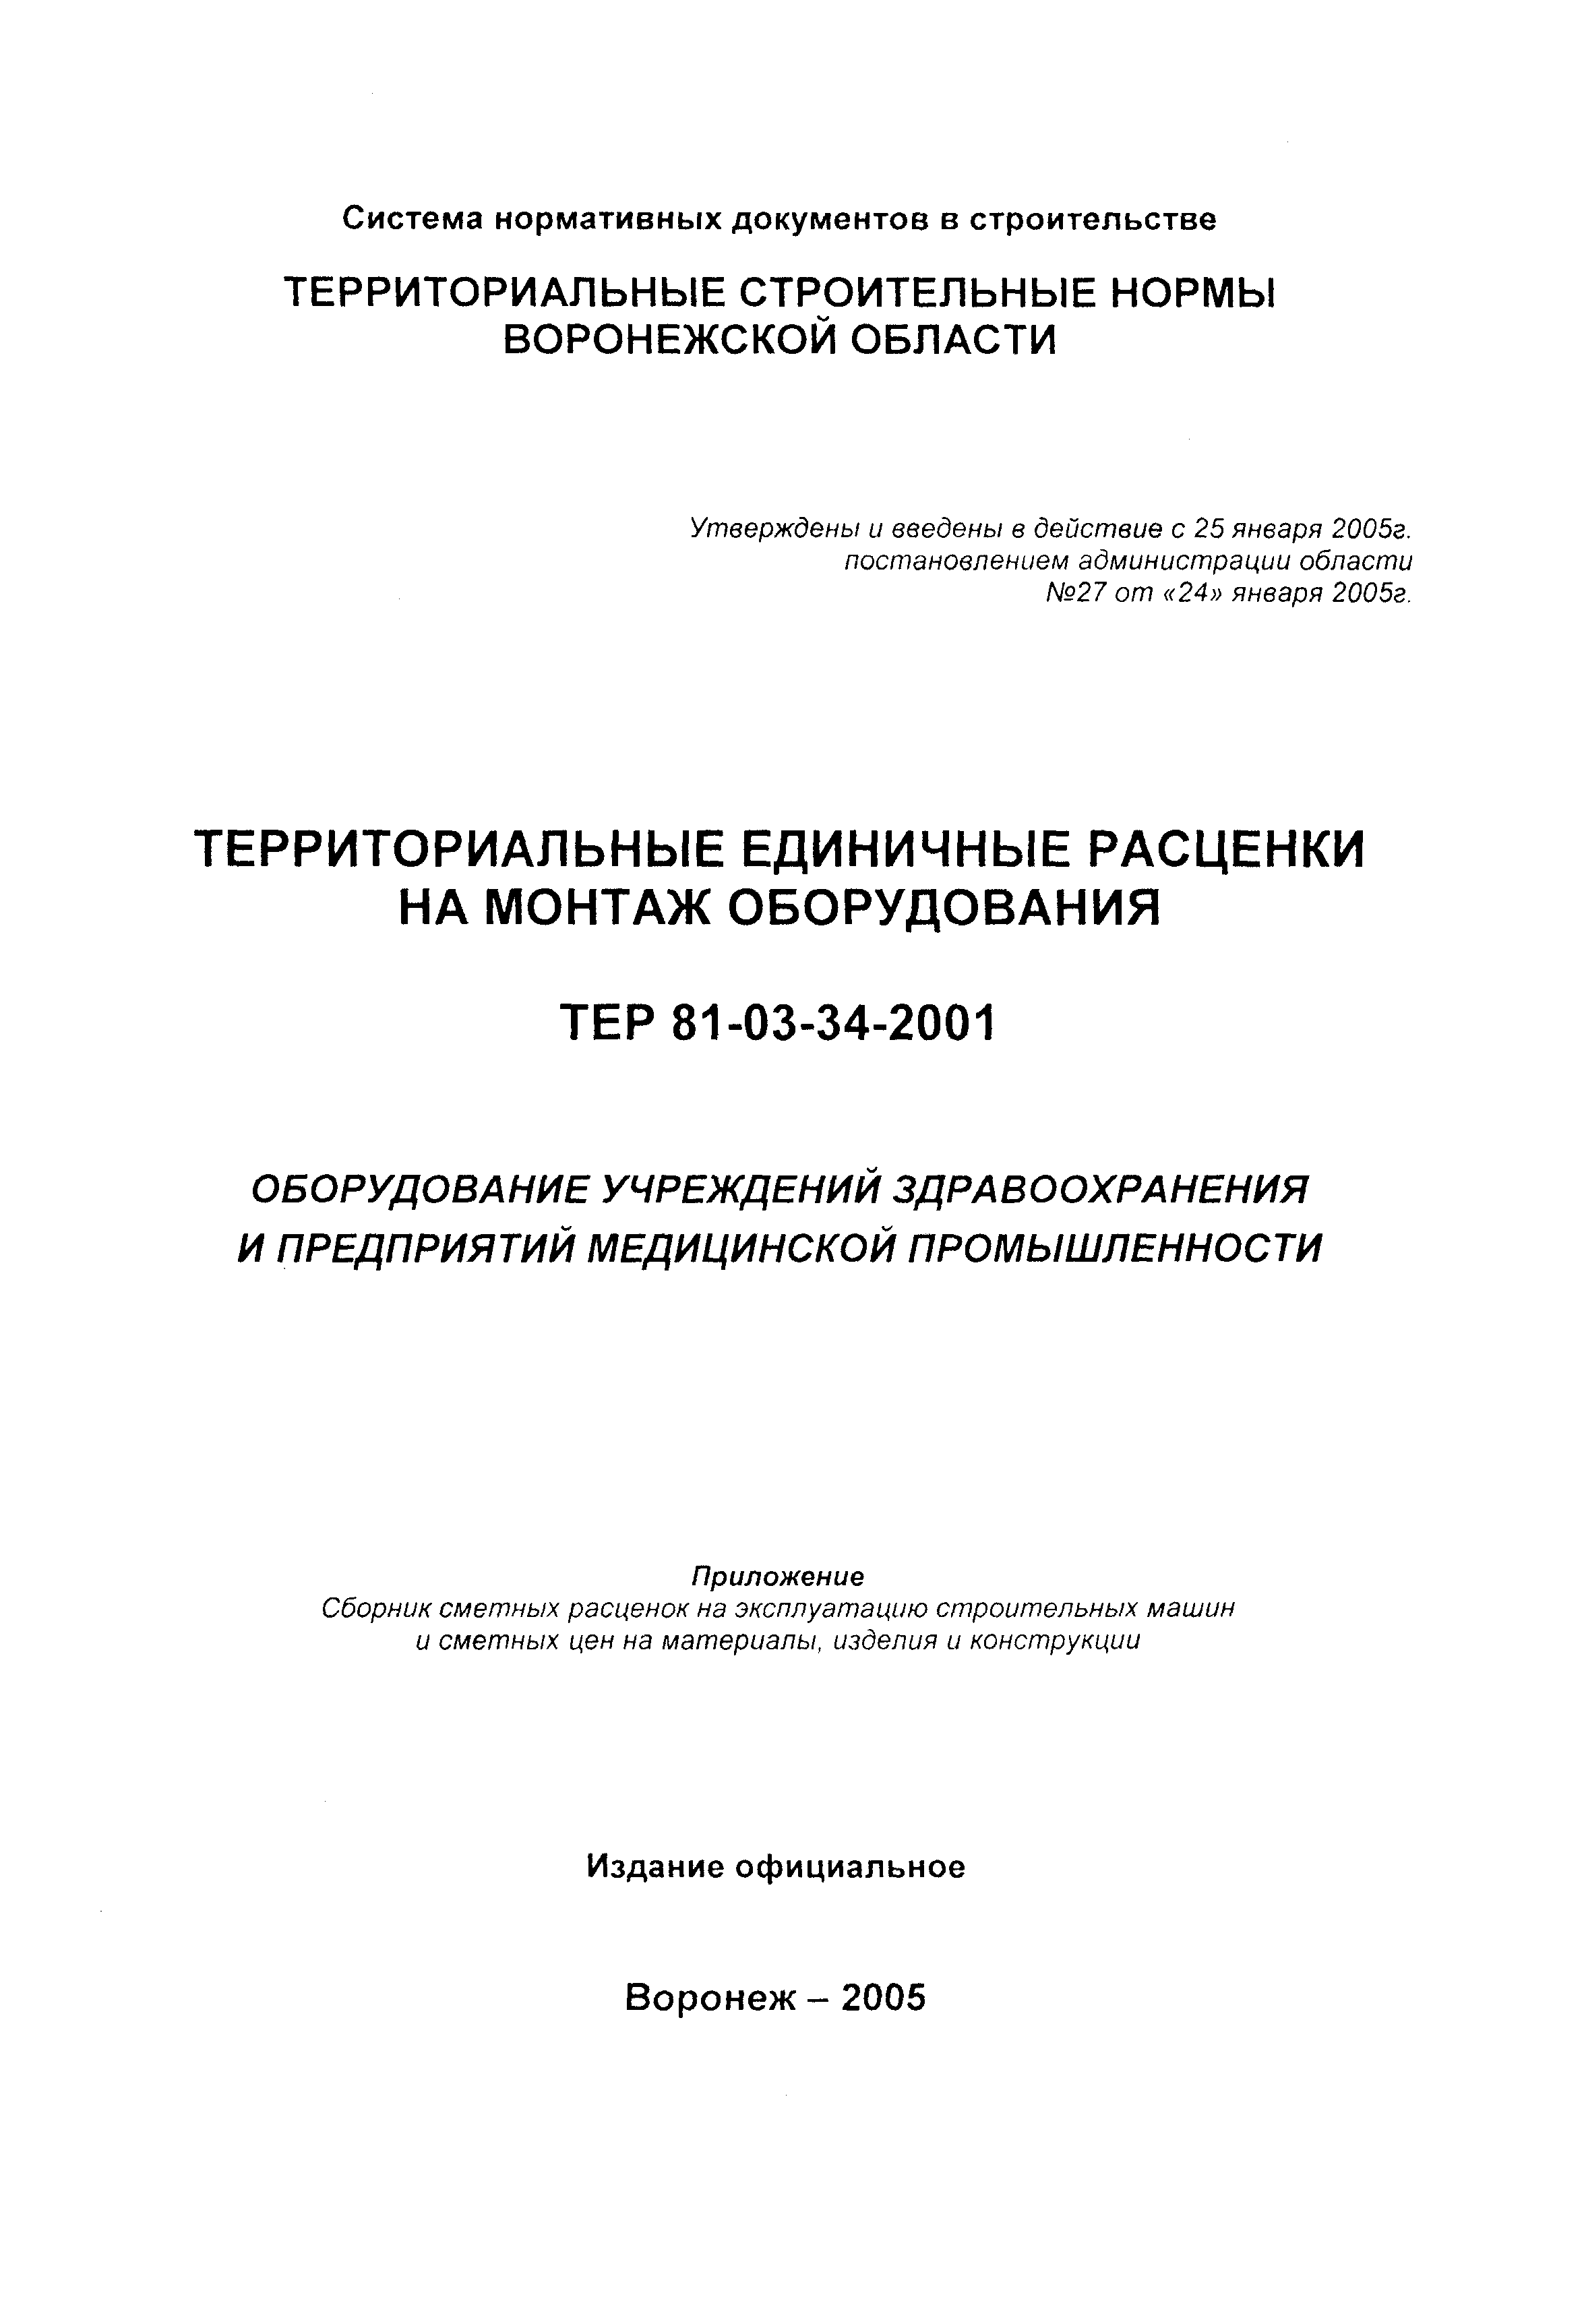 ТЕРм Воронежской области 81-03-34-2001